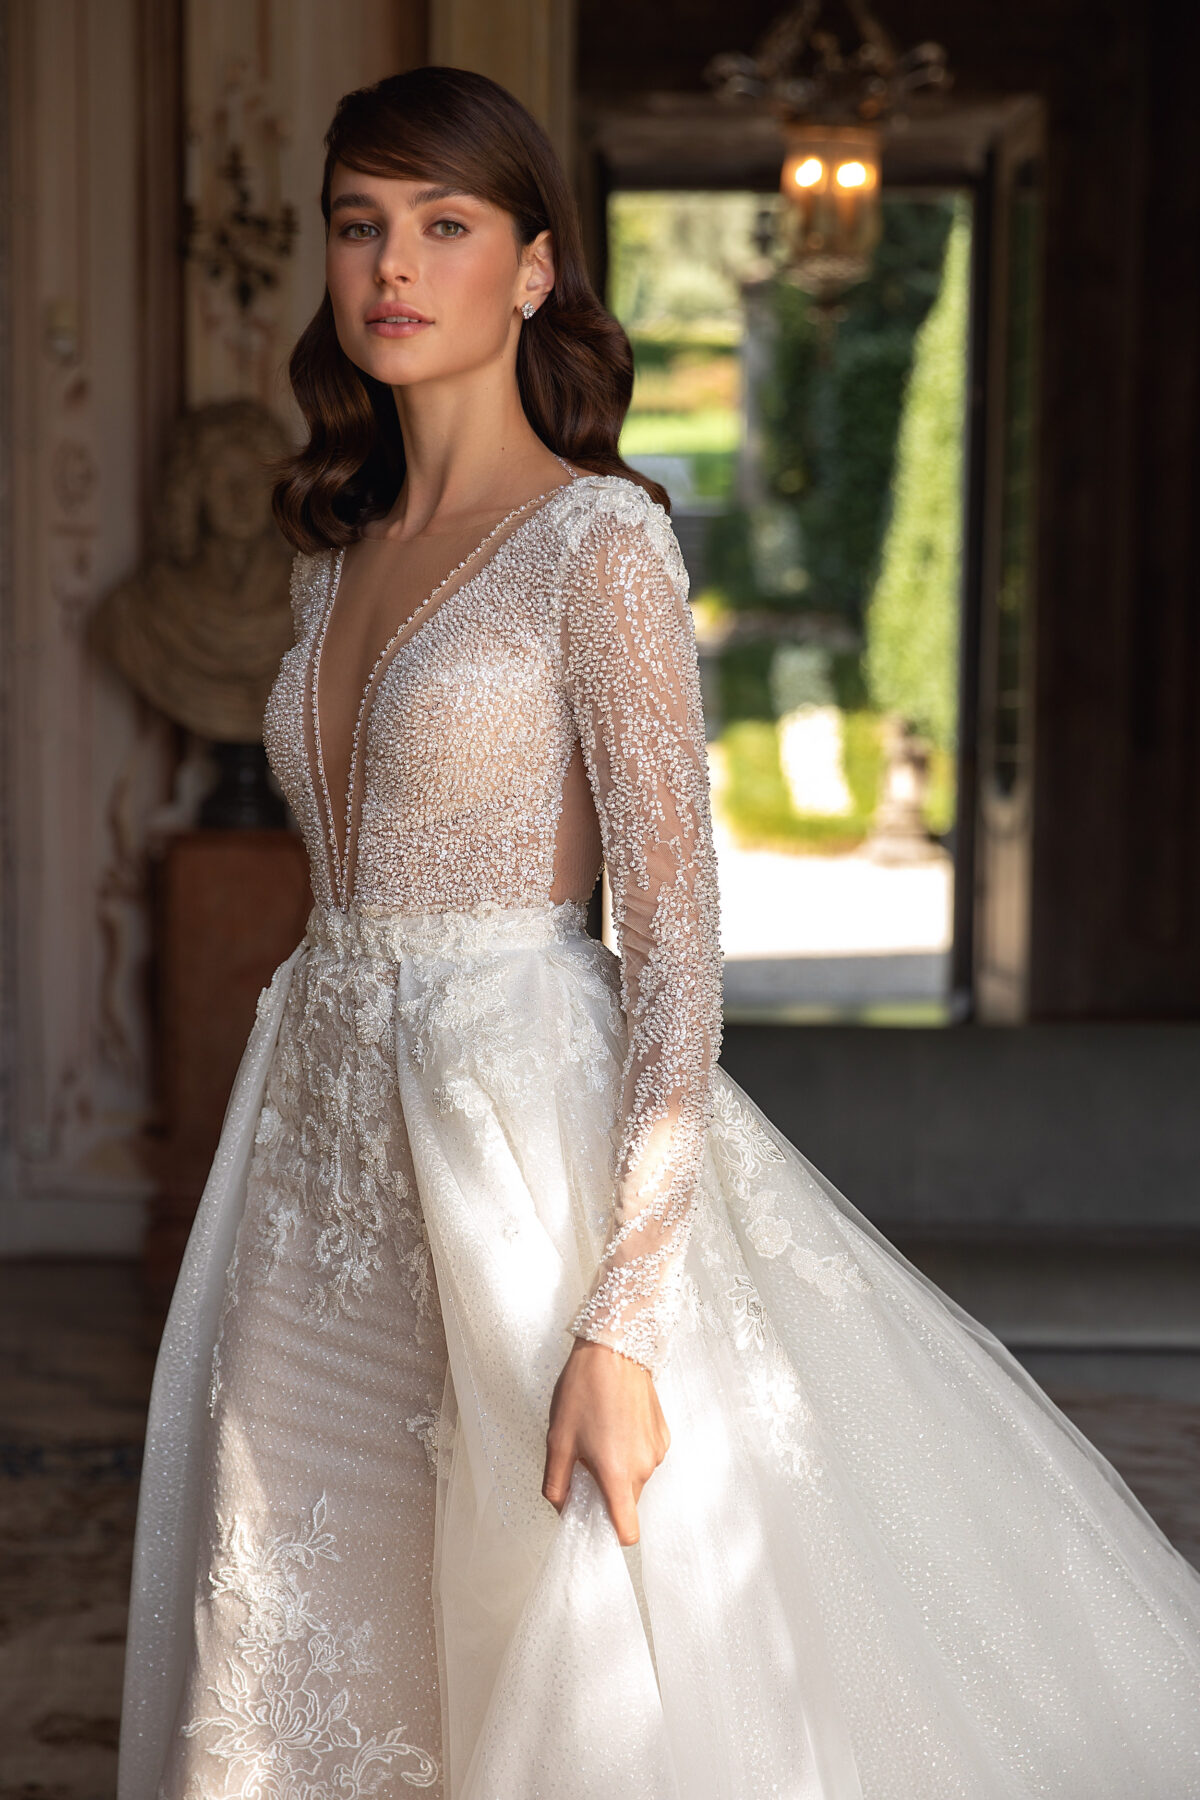 Pollardi 2023 Wedding Dress Trends - Elaborate gowns - Domenica